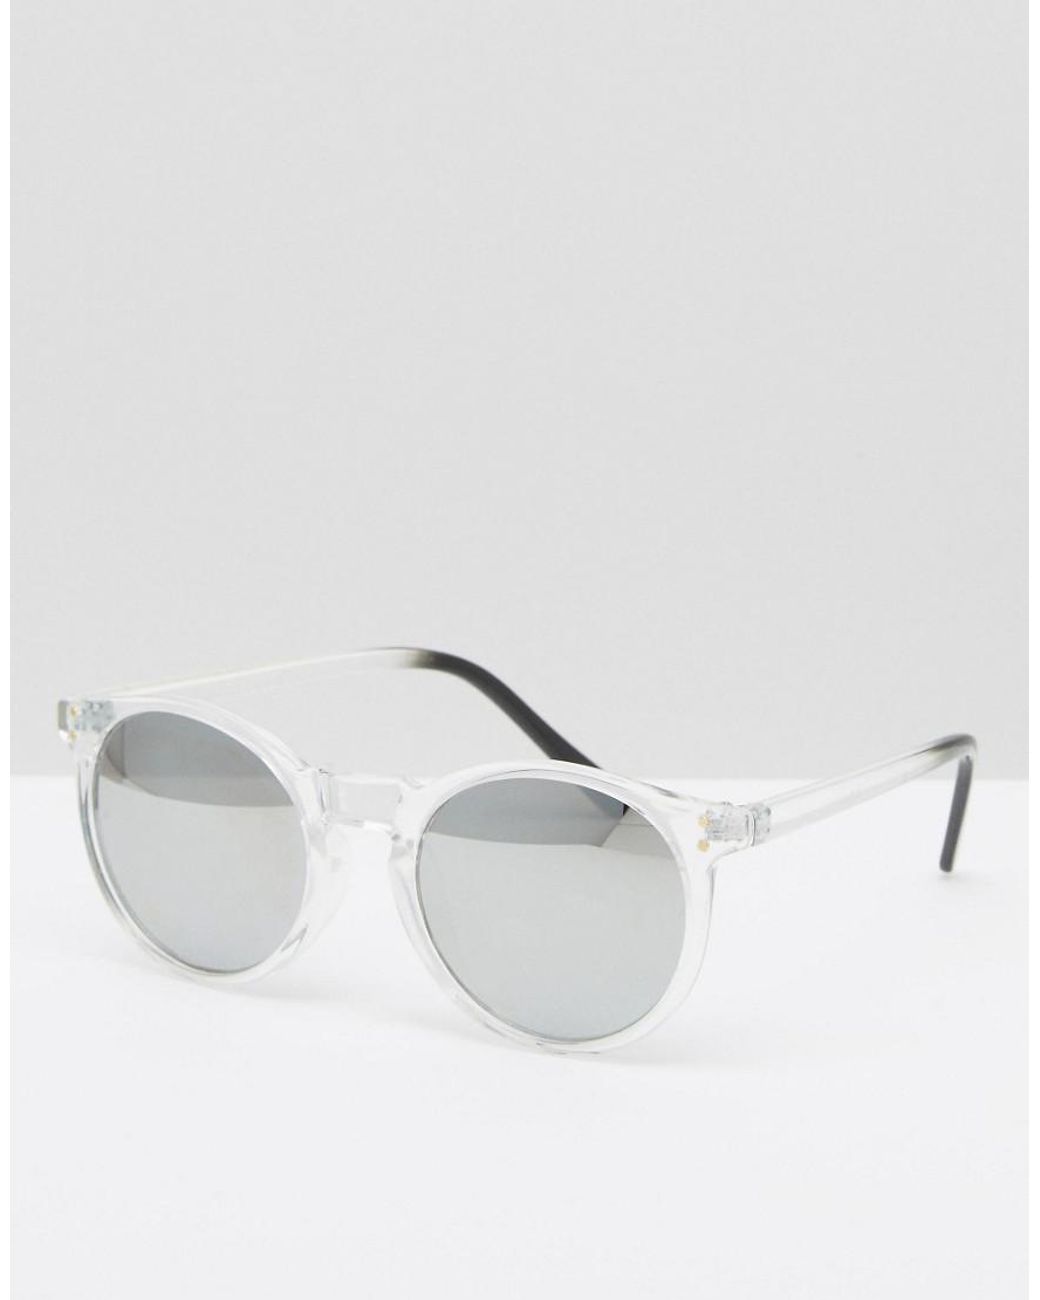 Coloured sunglasses -Transparent - Blue glasses - Transparent